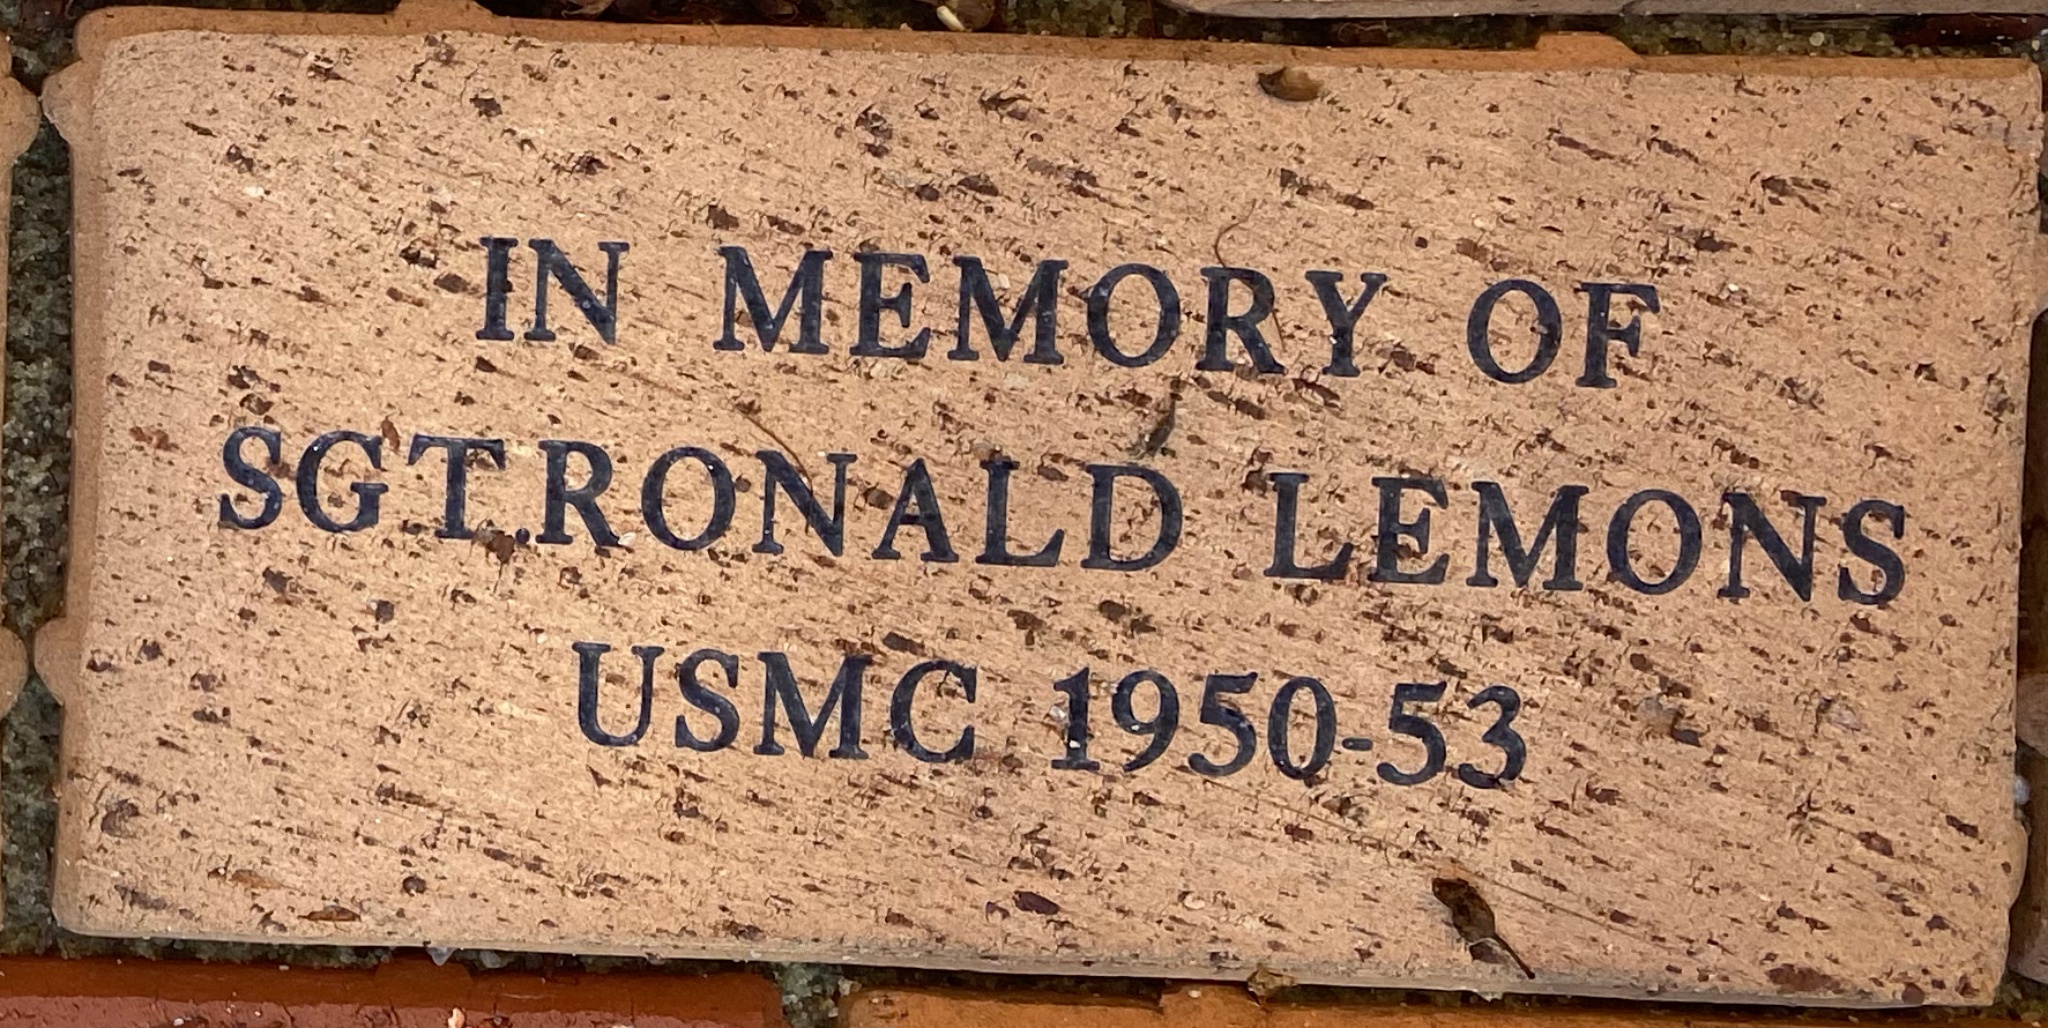 IN MEMORY OF  SGT RONALD  LEMONS USMC 1950-53